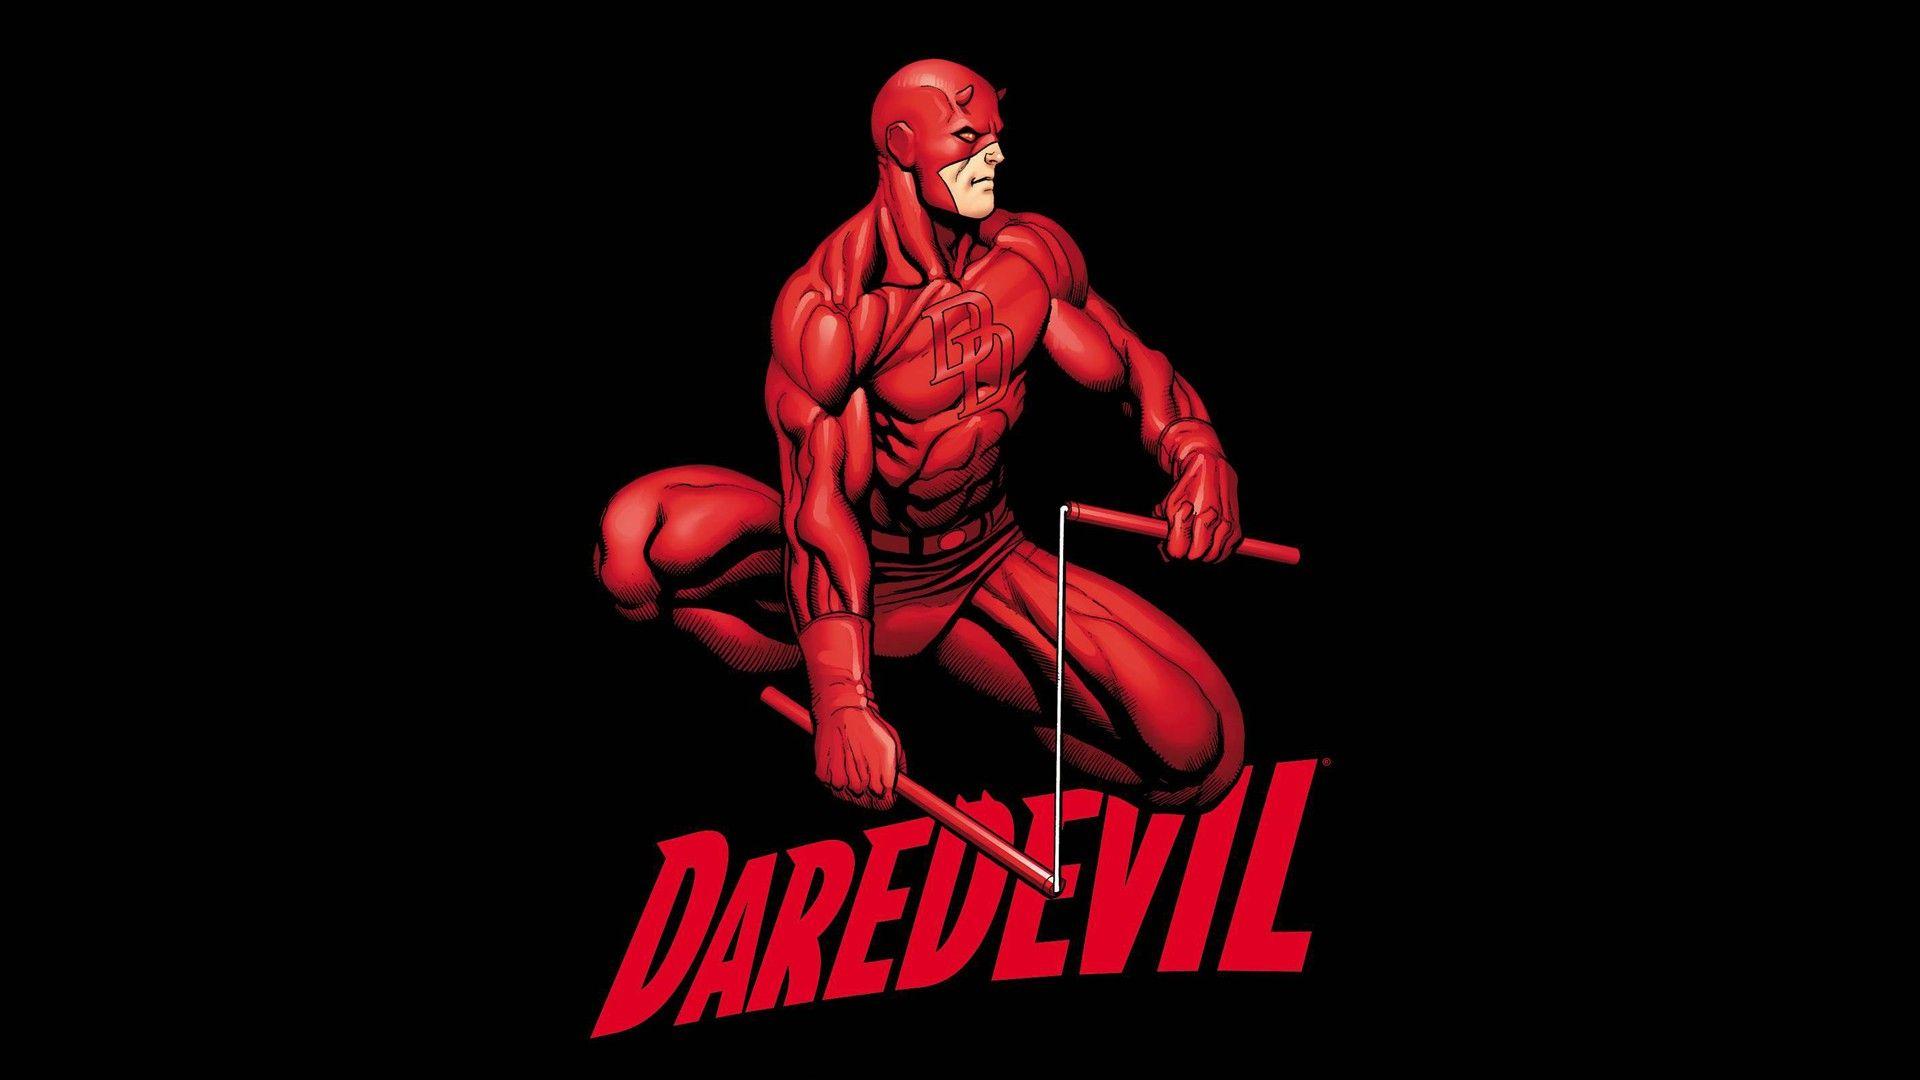 Daredevil, Marvel Comics, Superhero, Black Background, Comic Art